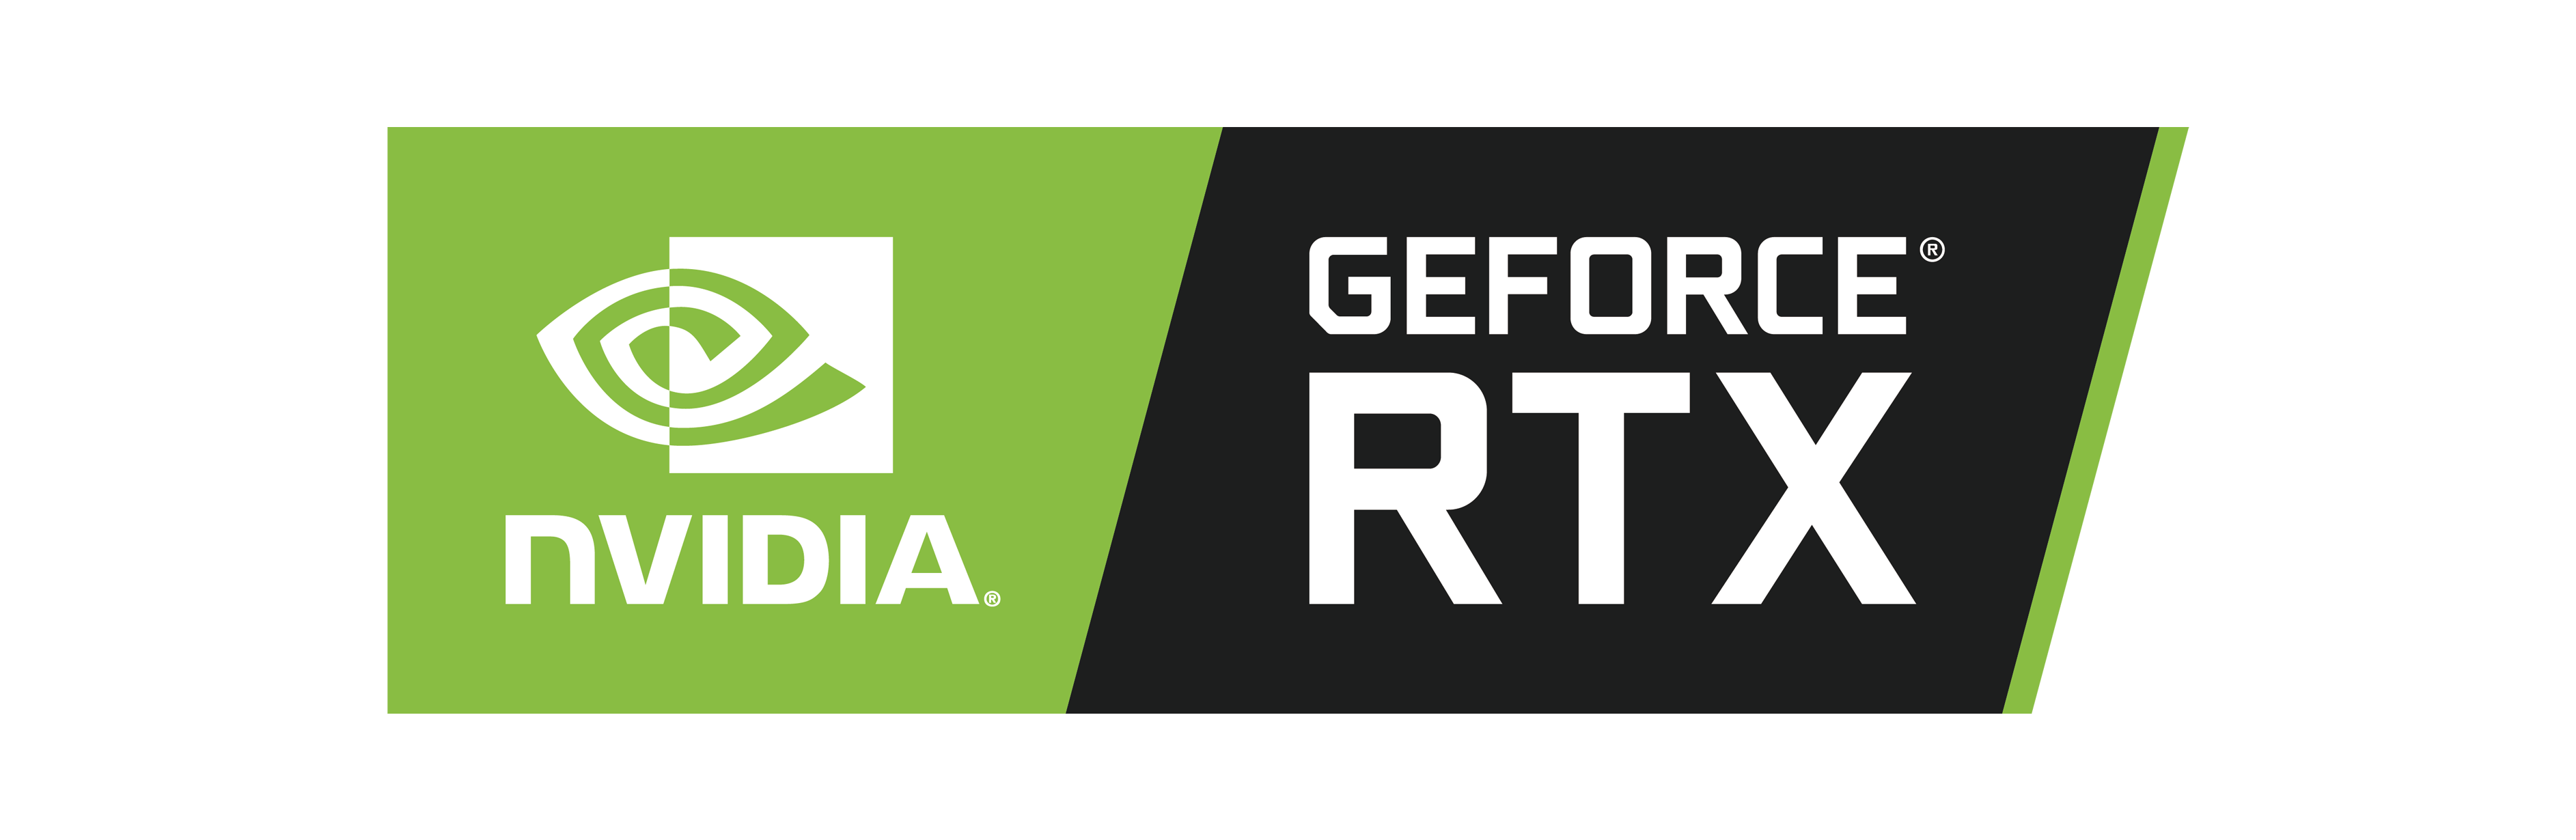 NVIDIA GeForce RTX 2080 (Ref)